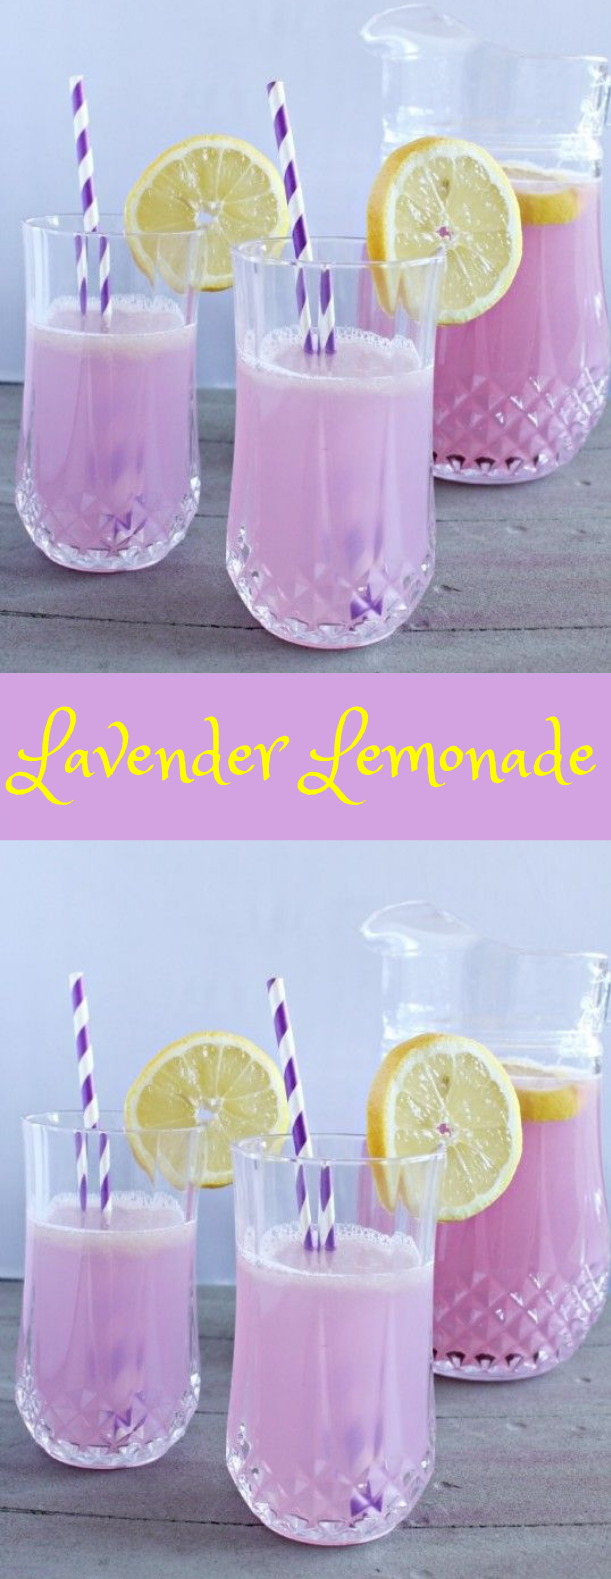 Lavender Lemonade #Drink #Lemonade